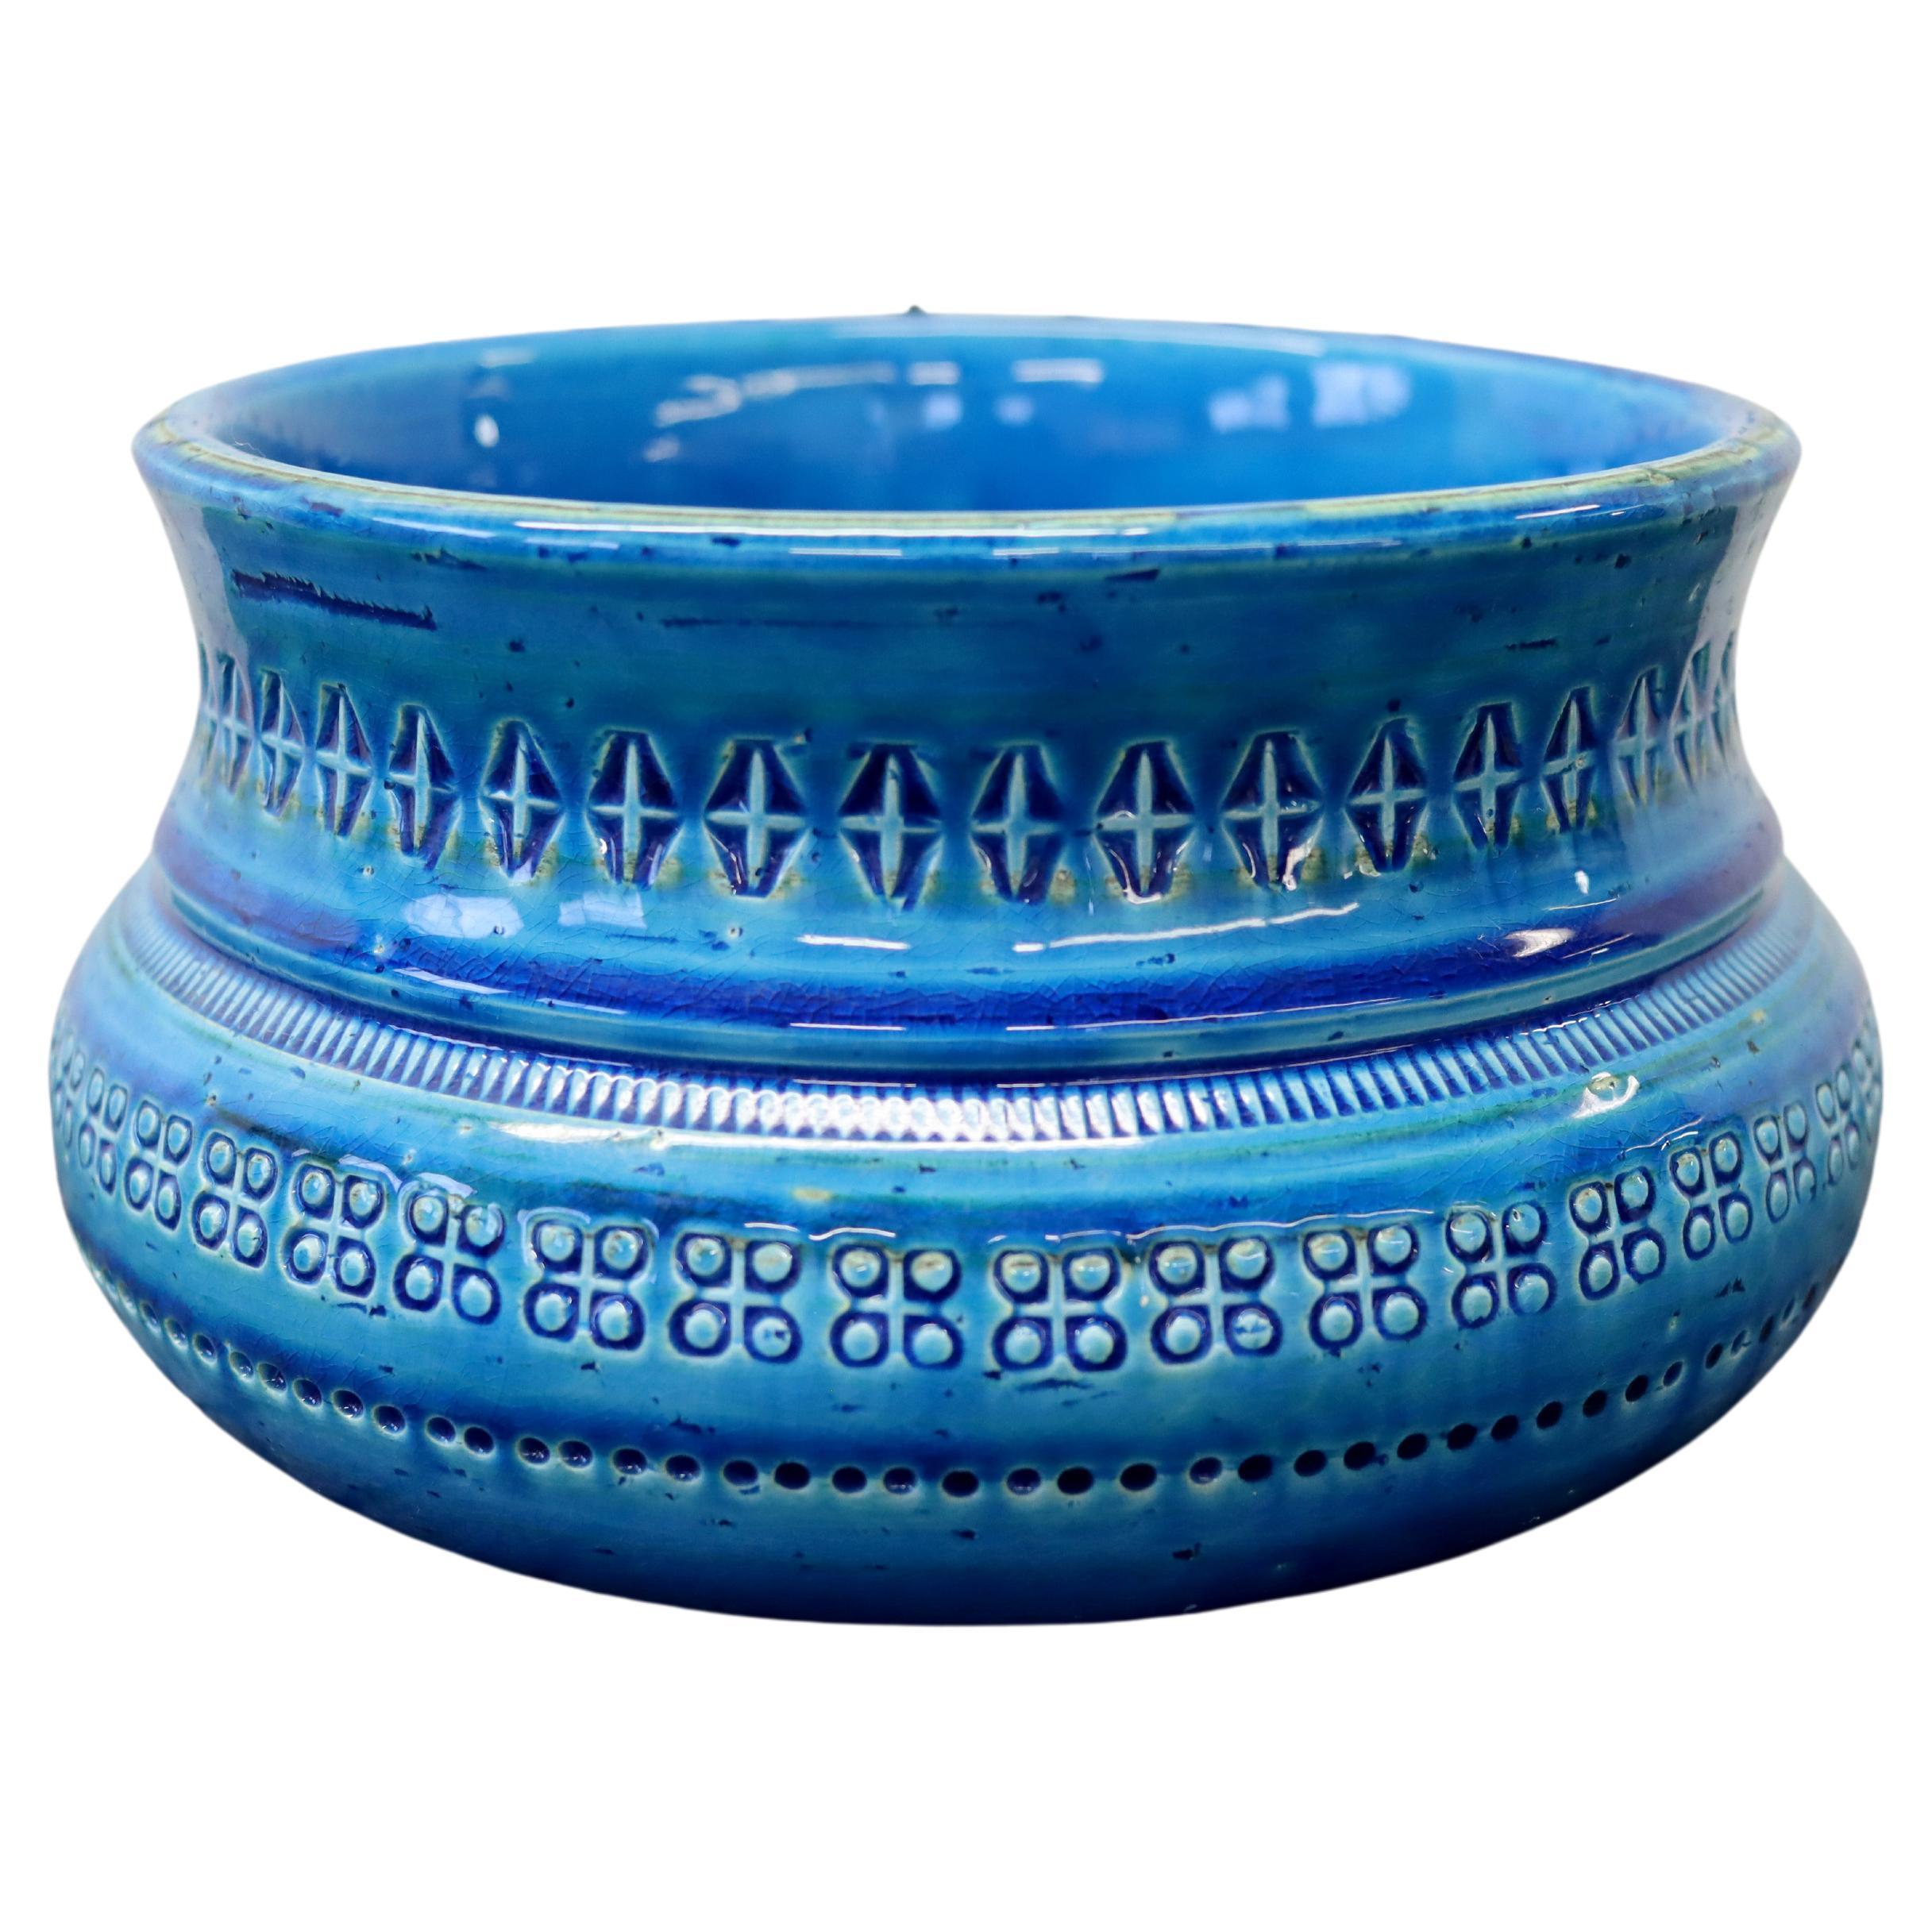 Aldo Londi Flavia Bitossi Rimini Blue Italian Ceramic Bowl